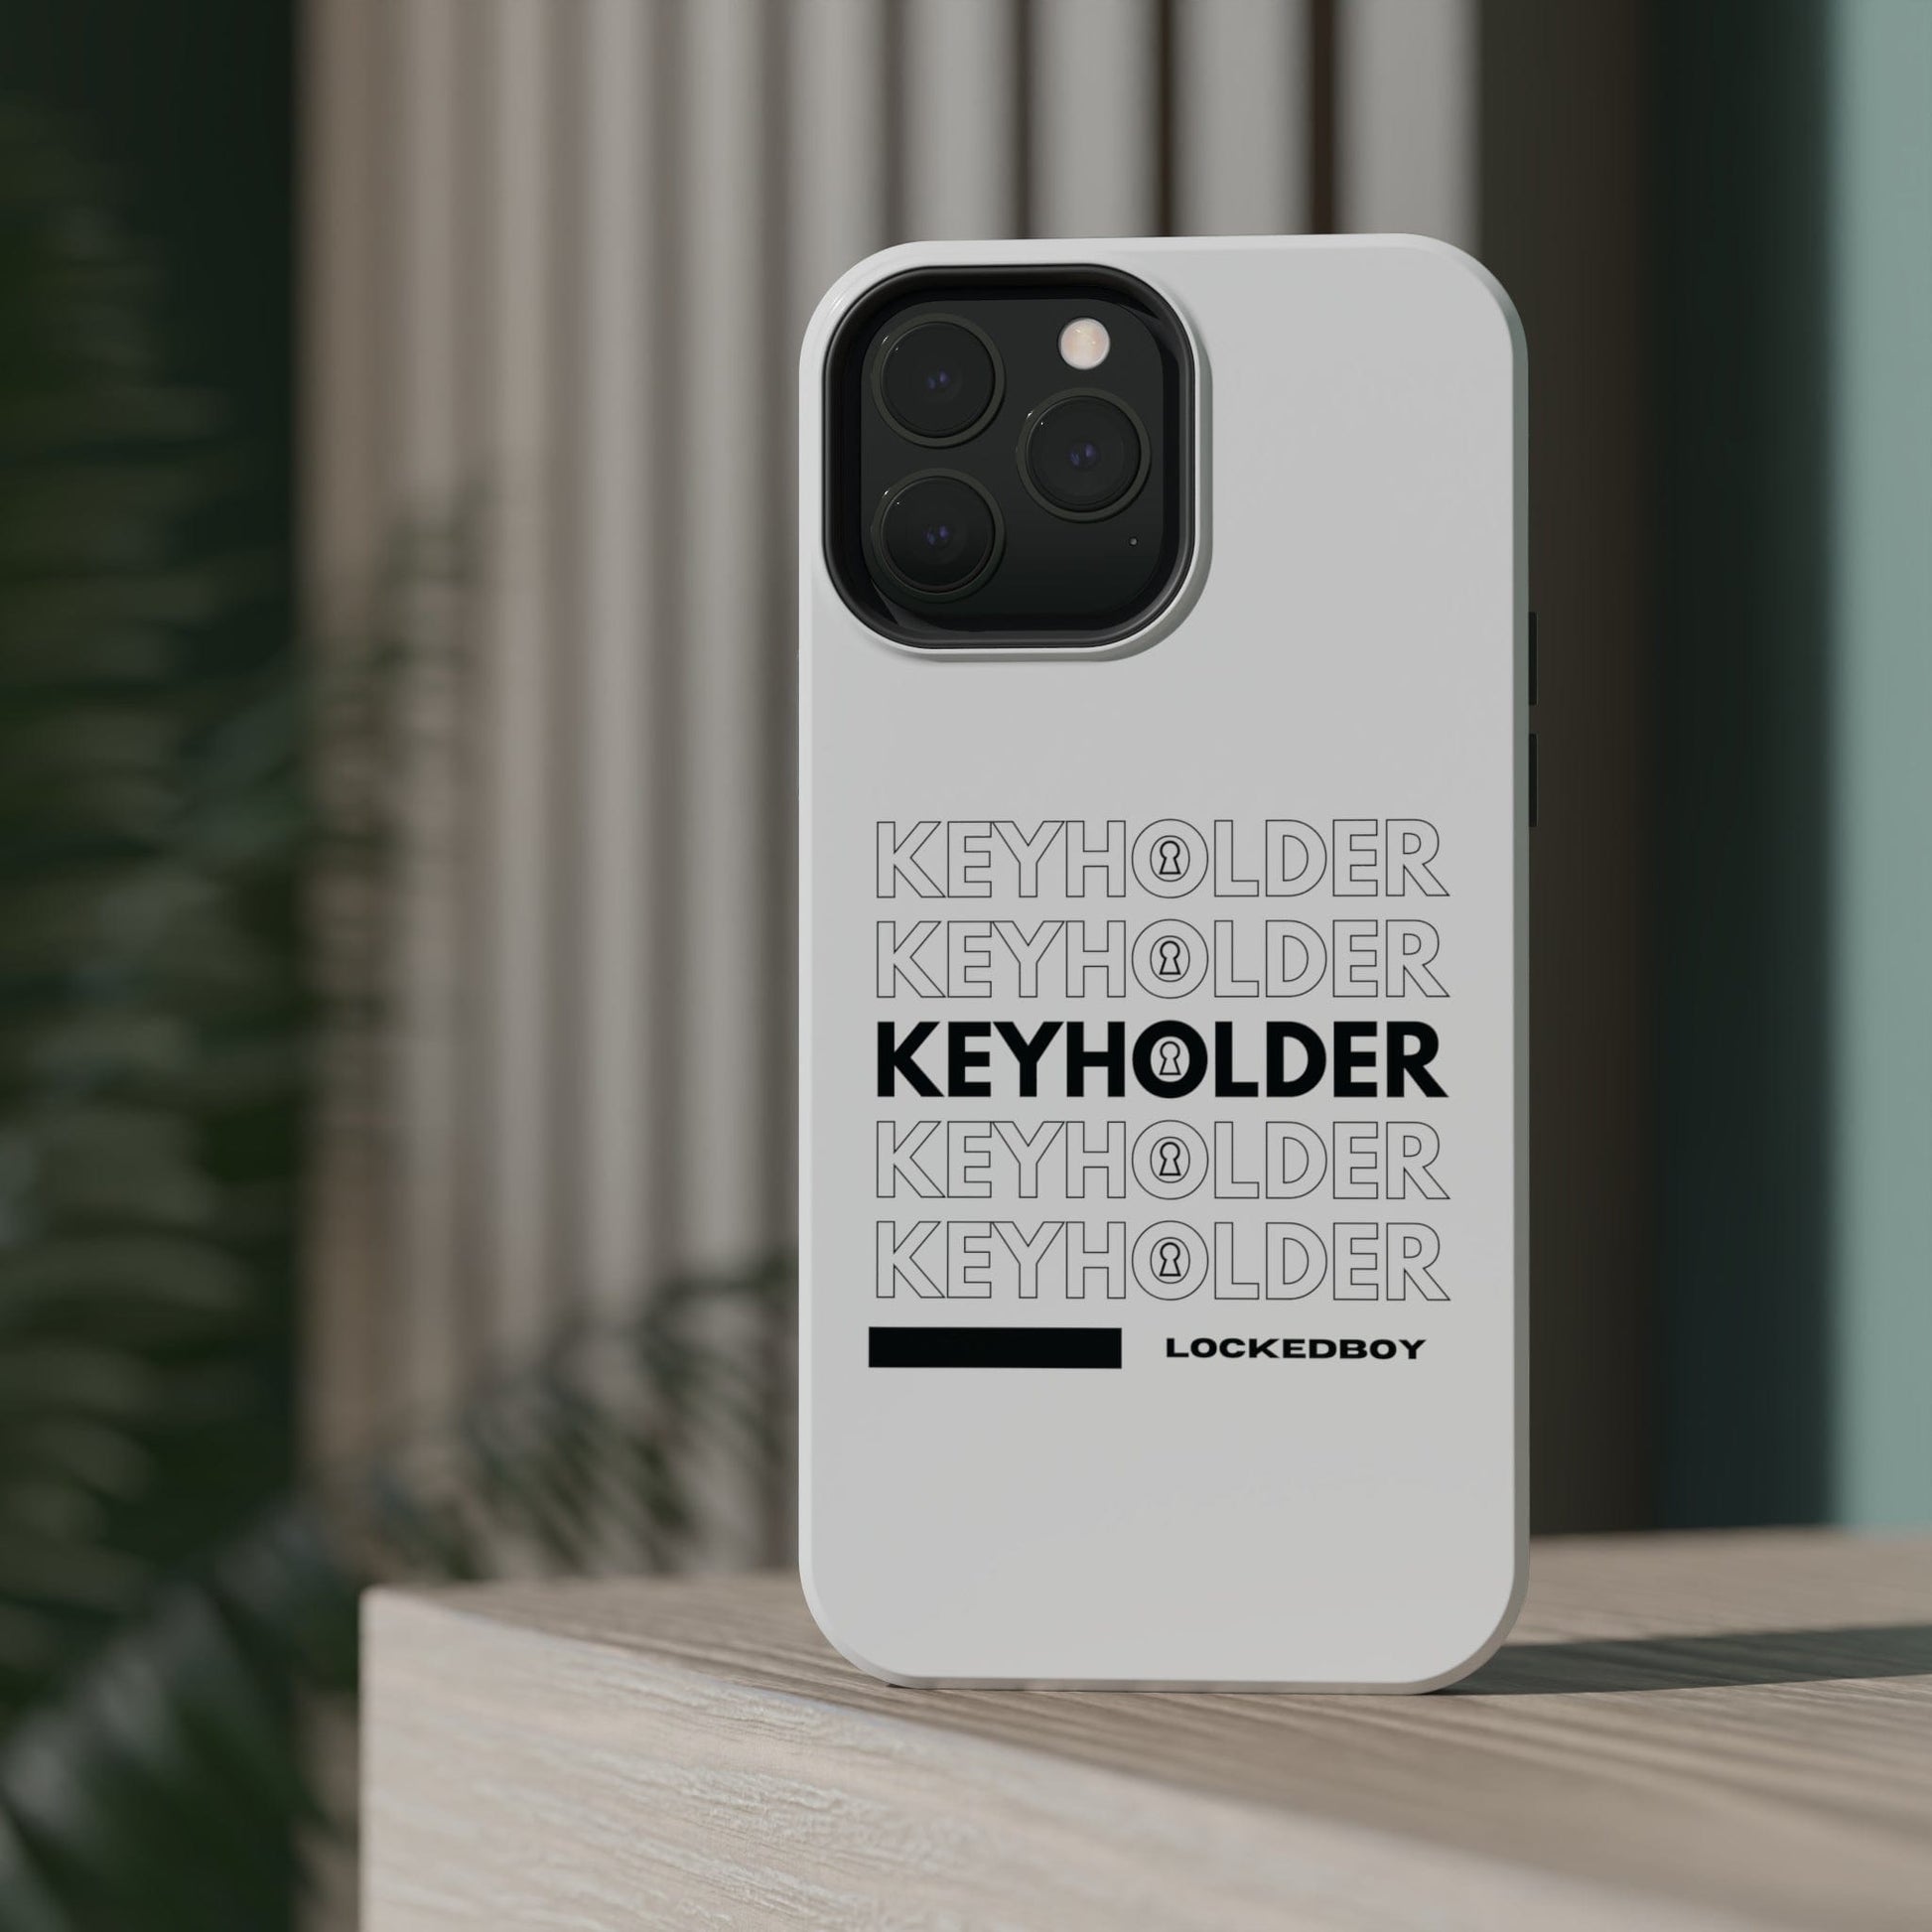 Phone Case KeyHolder Bag Inspo MagSafe Tough Cases LEATHERDADDY BATOR